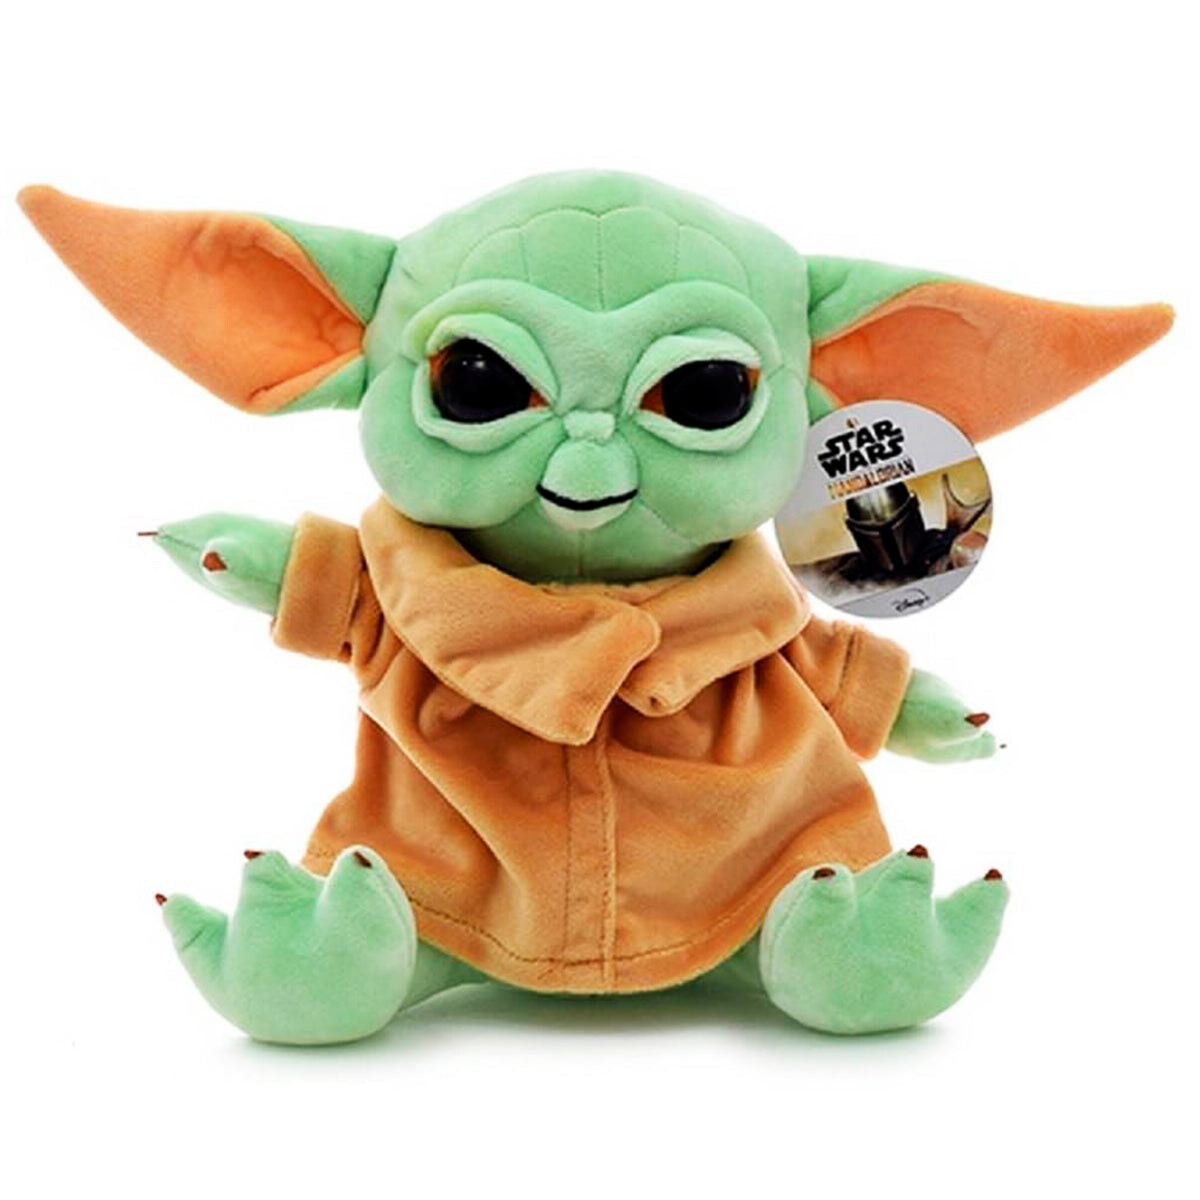 Star Wars Peluches 25cm Baby Yoda Darth Vader - Yoda 